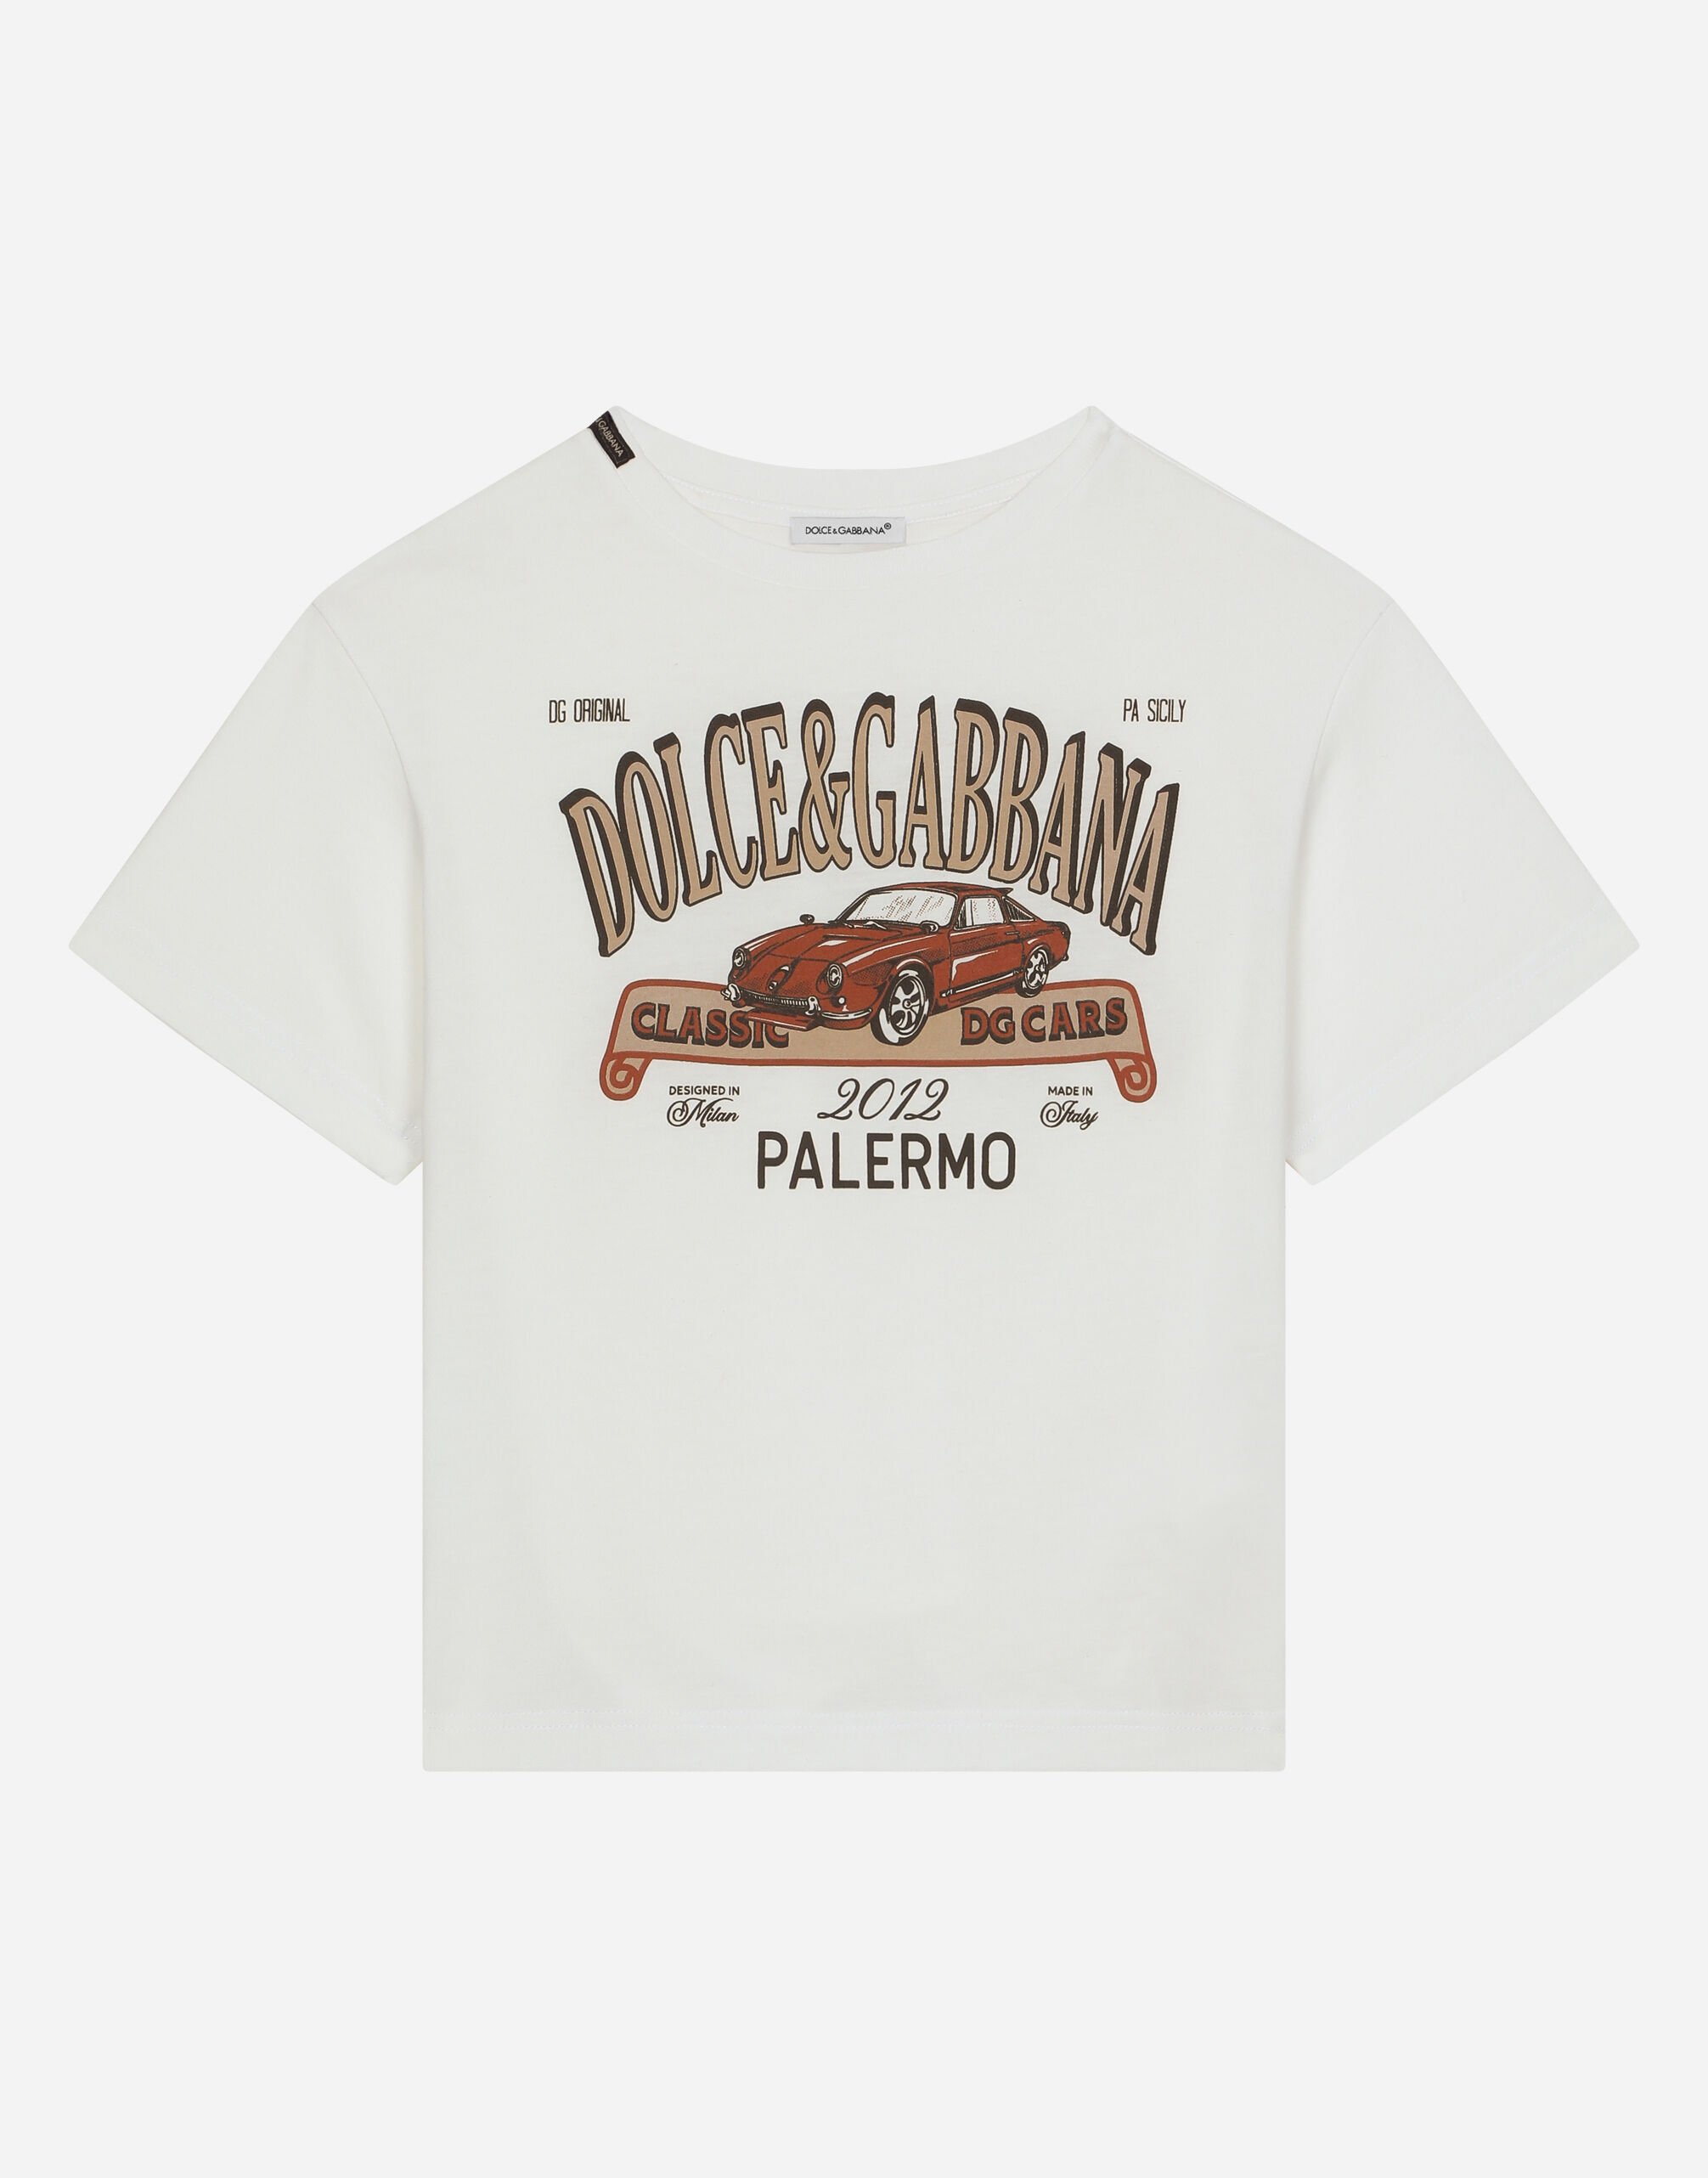 Dolce & Gabbana Jersey T-shirt with DG Palermo logo Print L44S10FI5JO